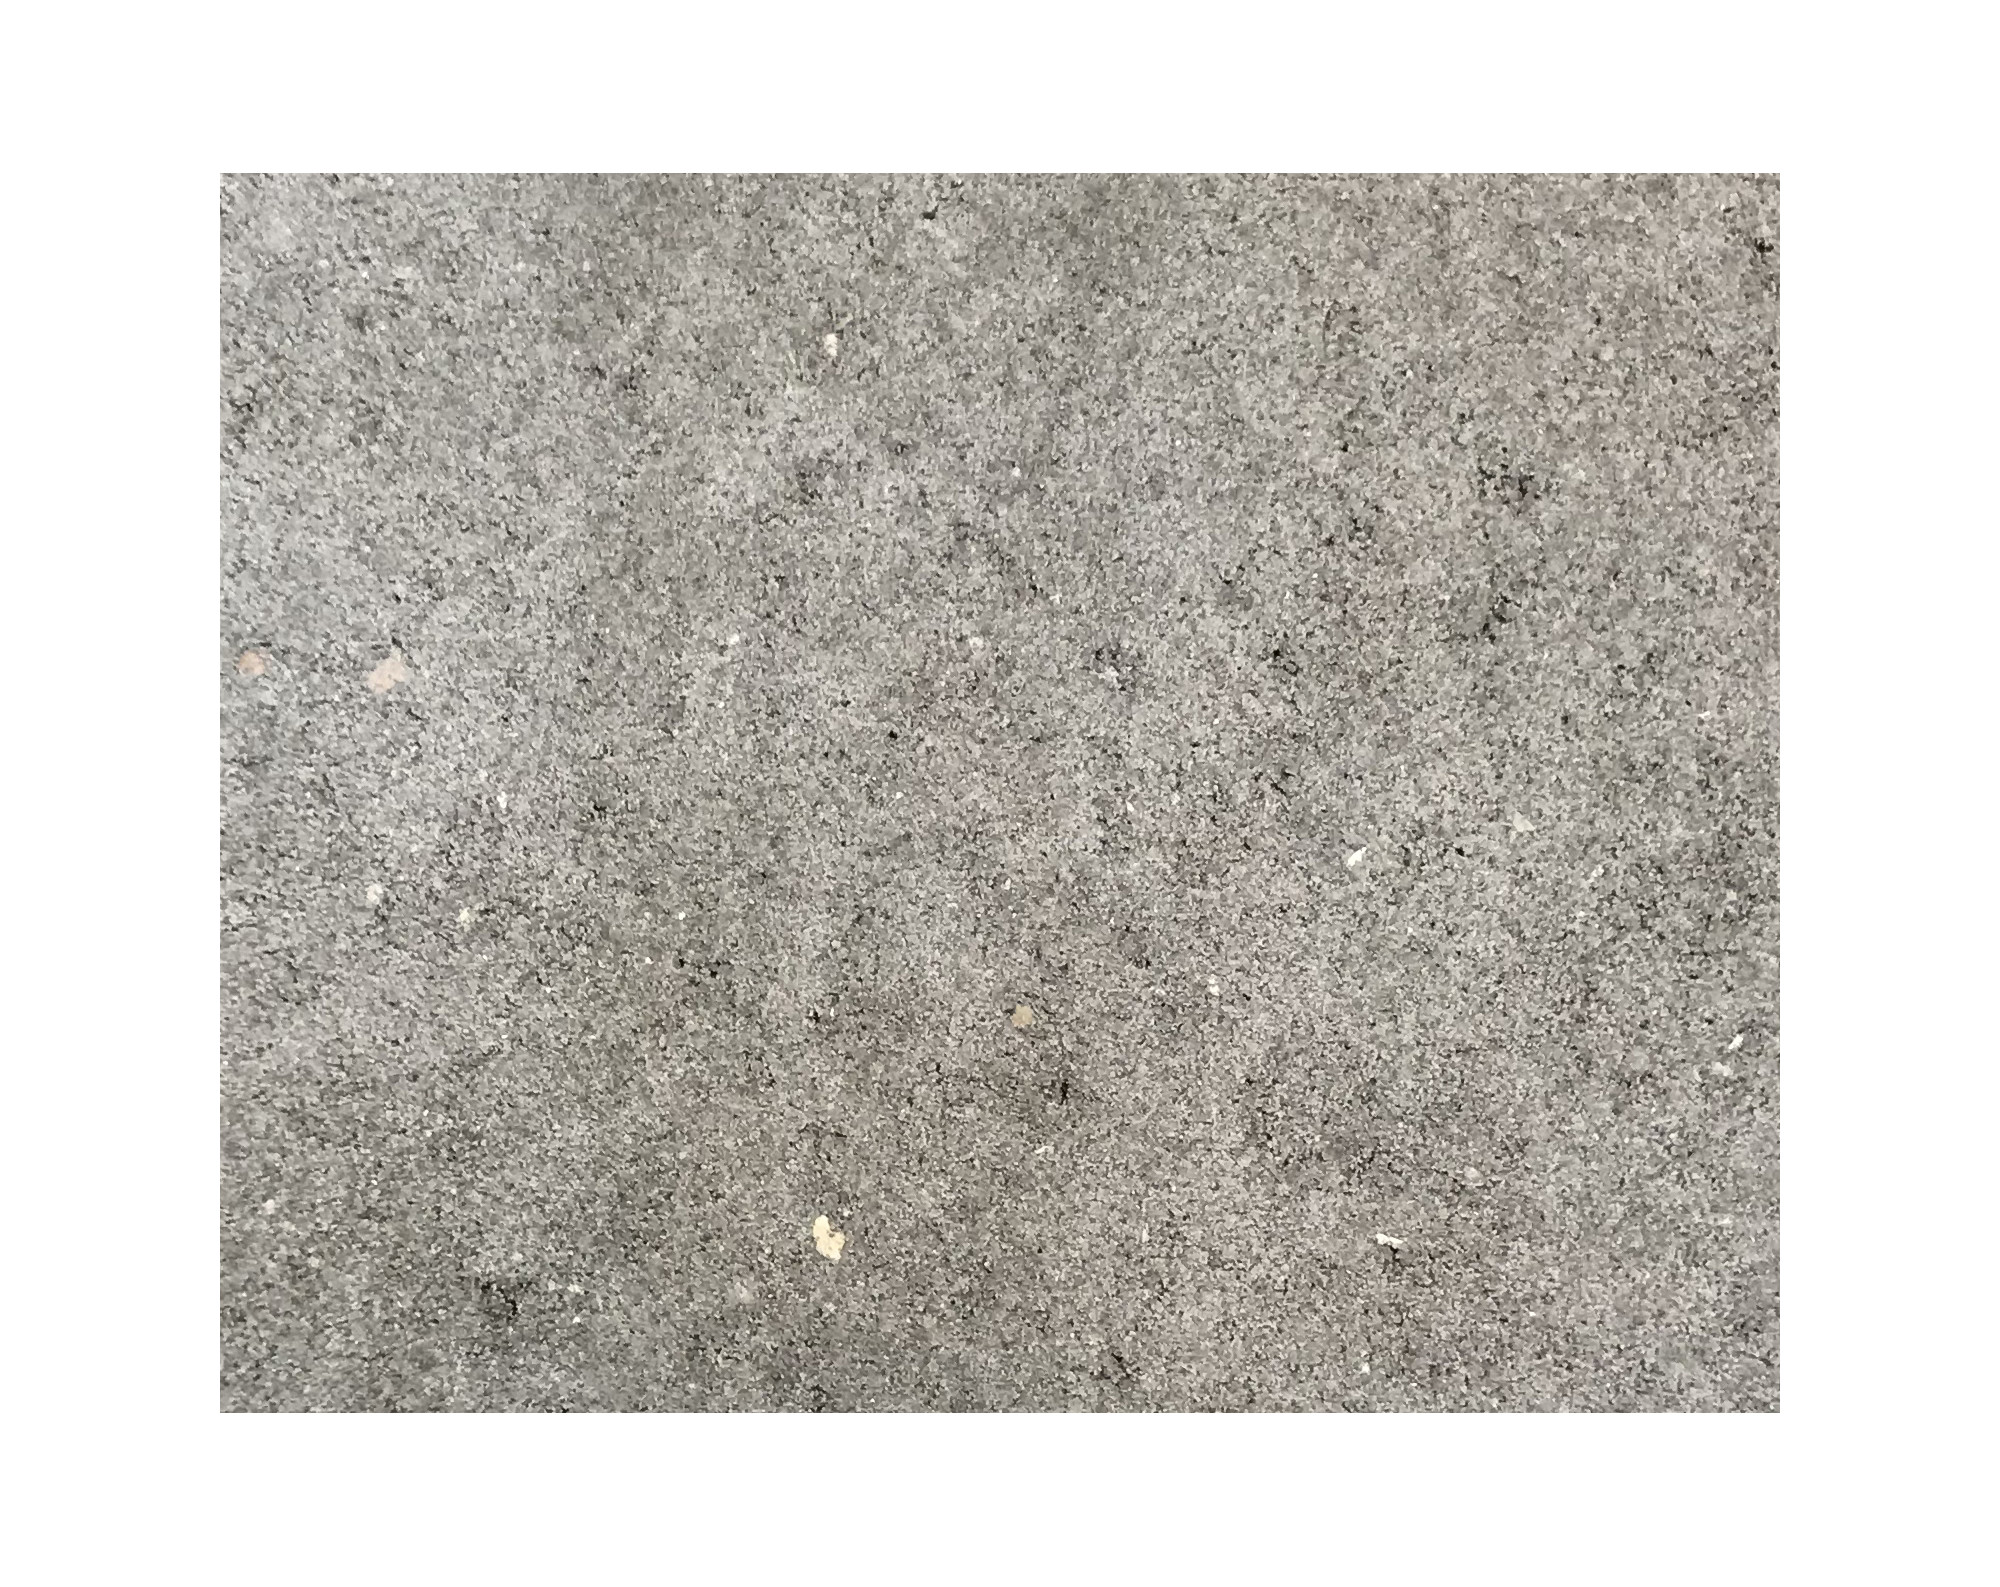 Harmo roc athenset, rustica-serie, rond d:6,00m, grijs, beton